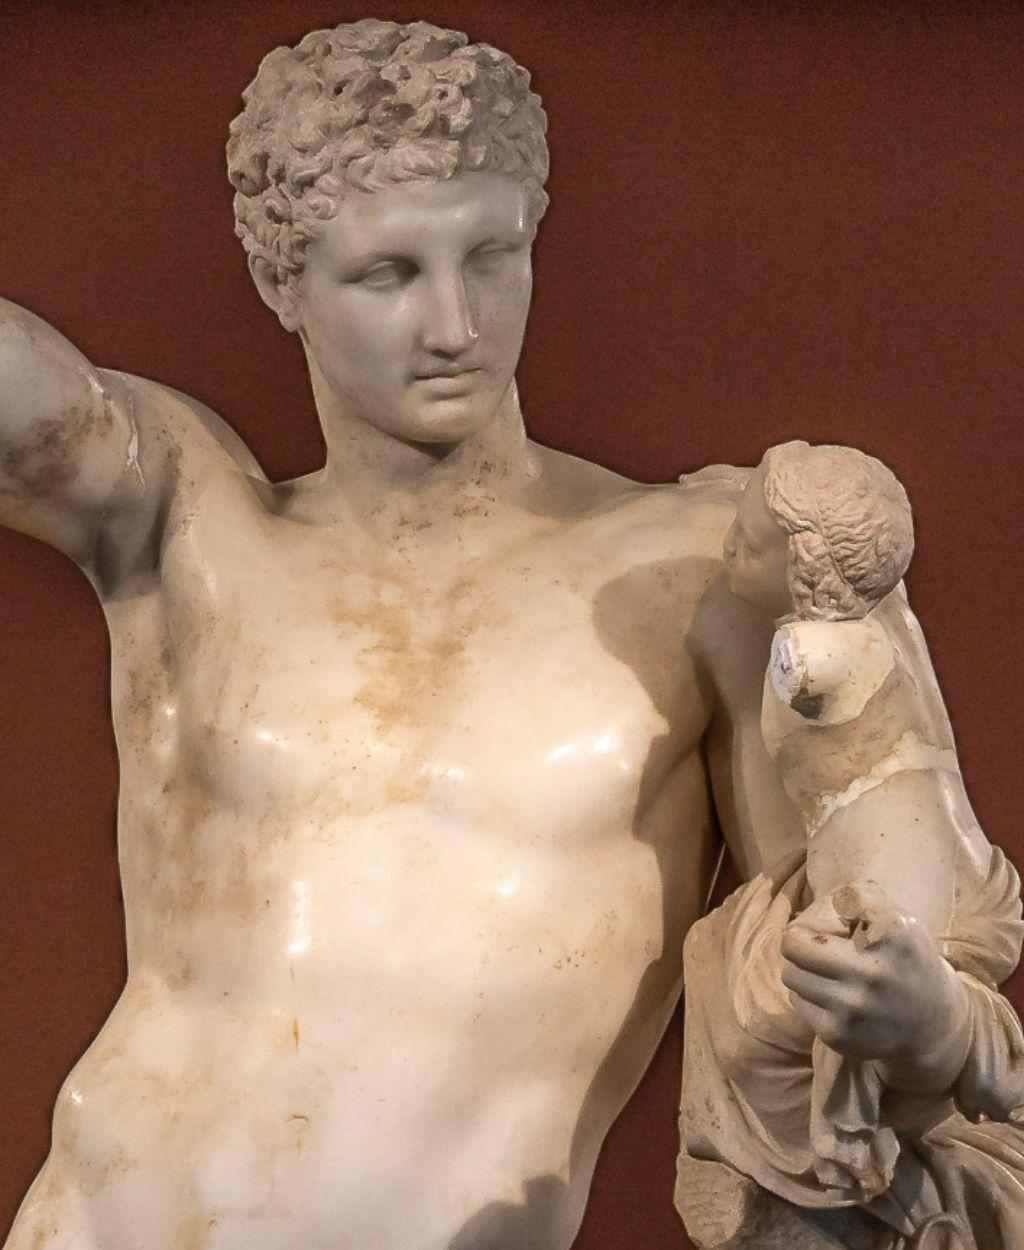 Hermes cargando a Dionisios bebé